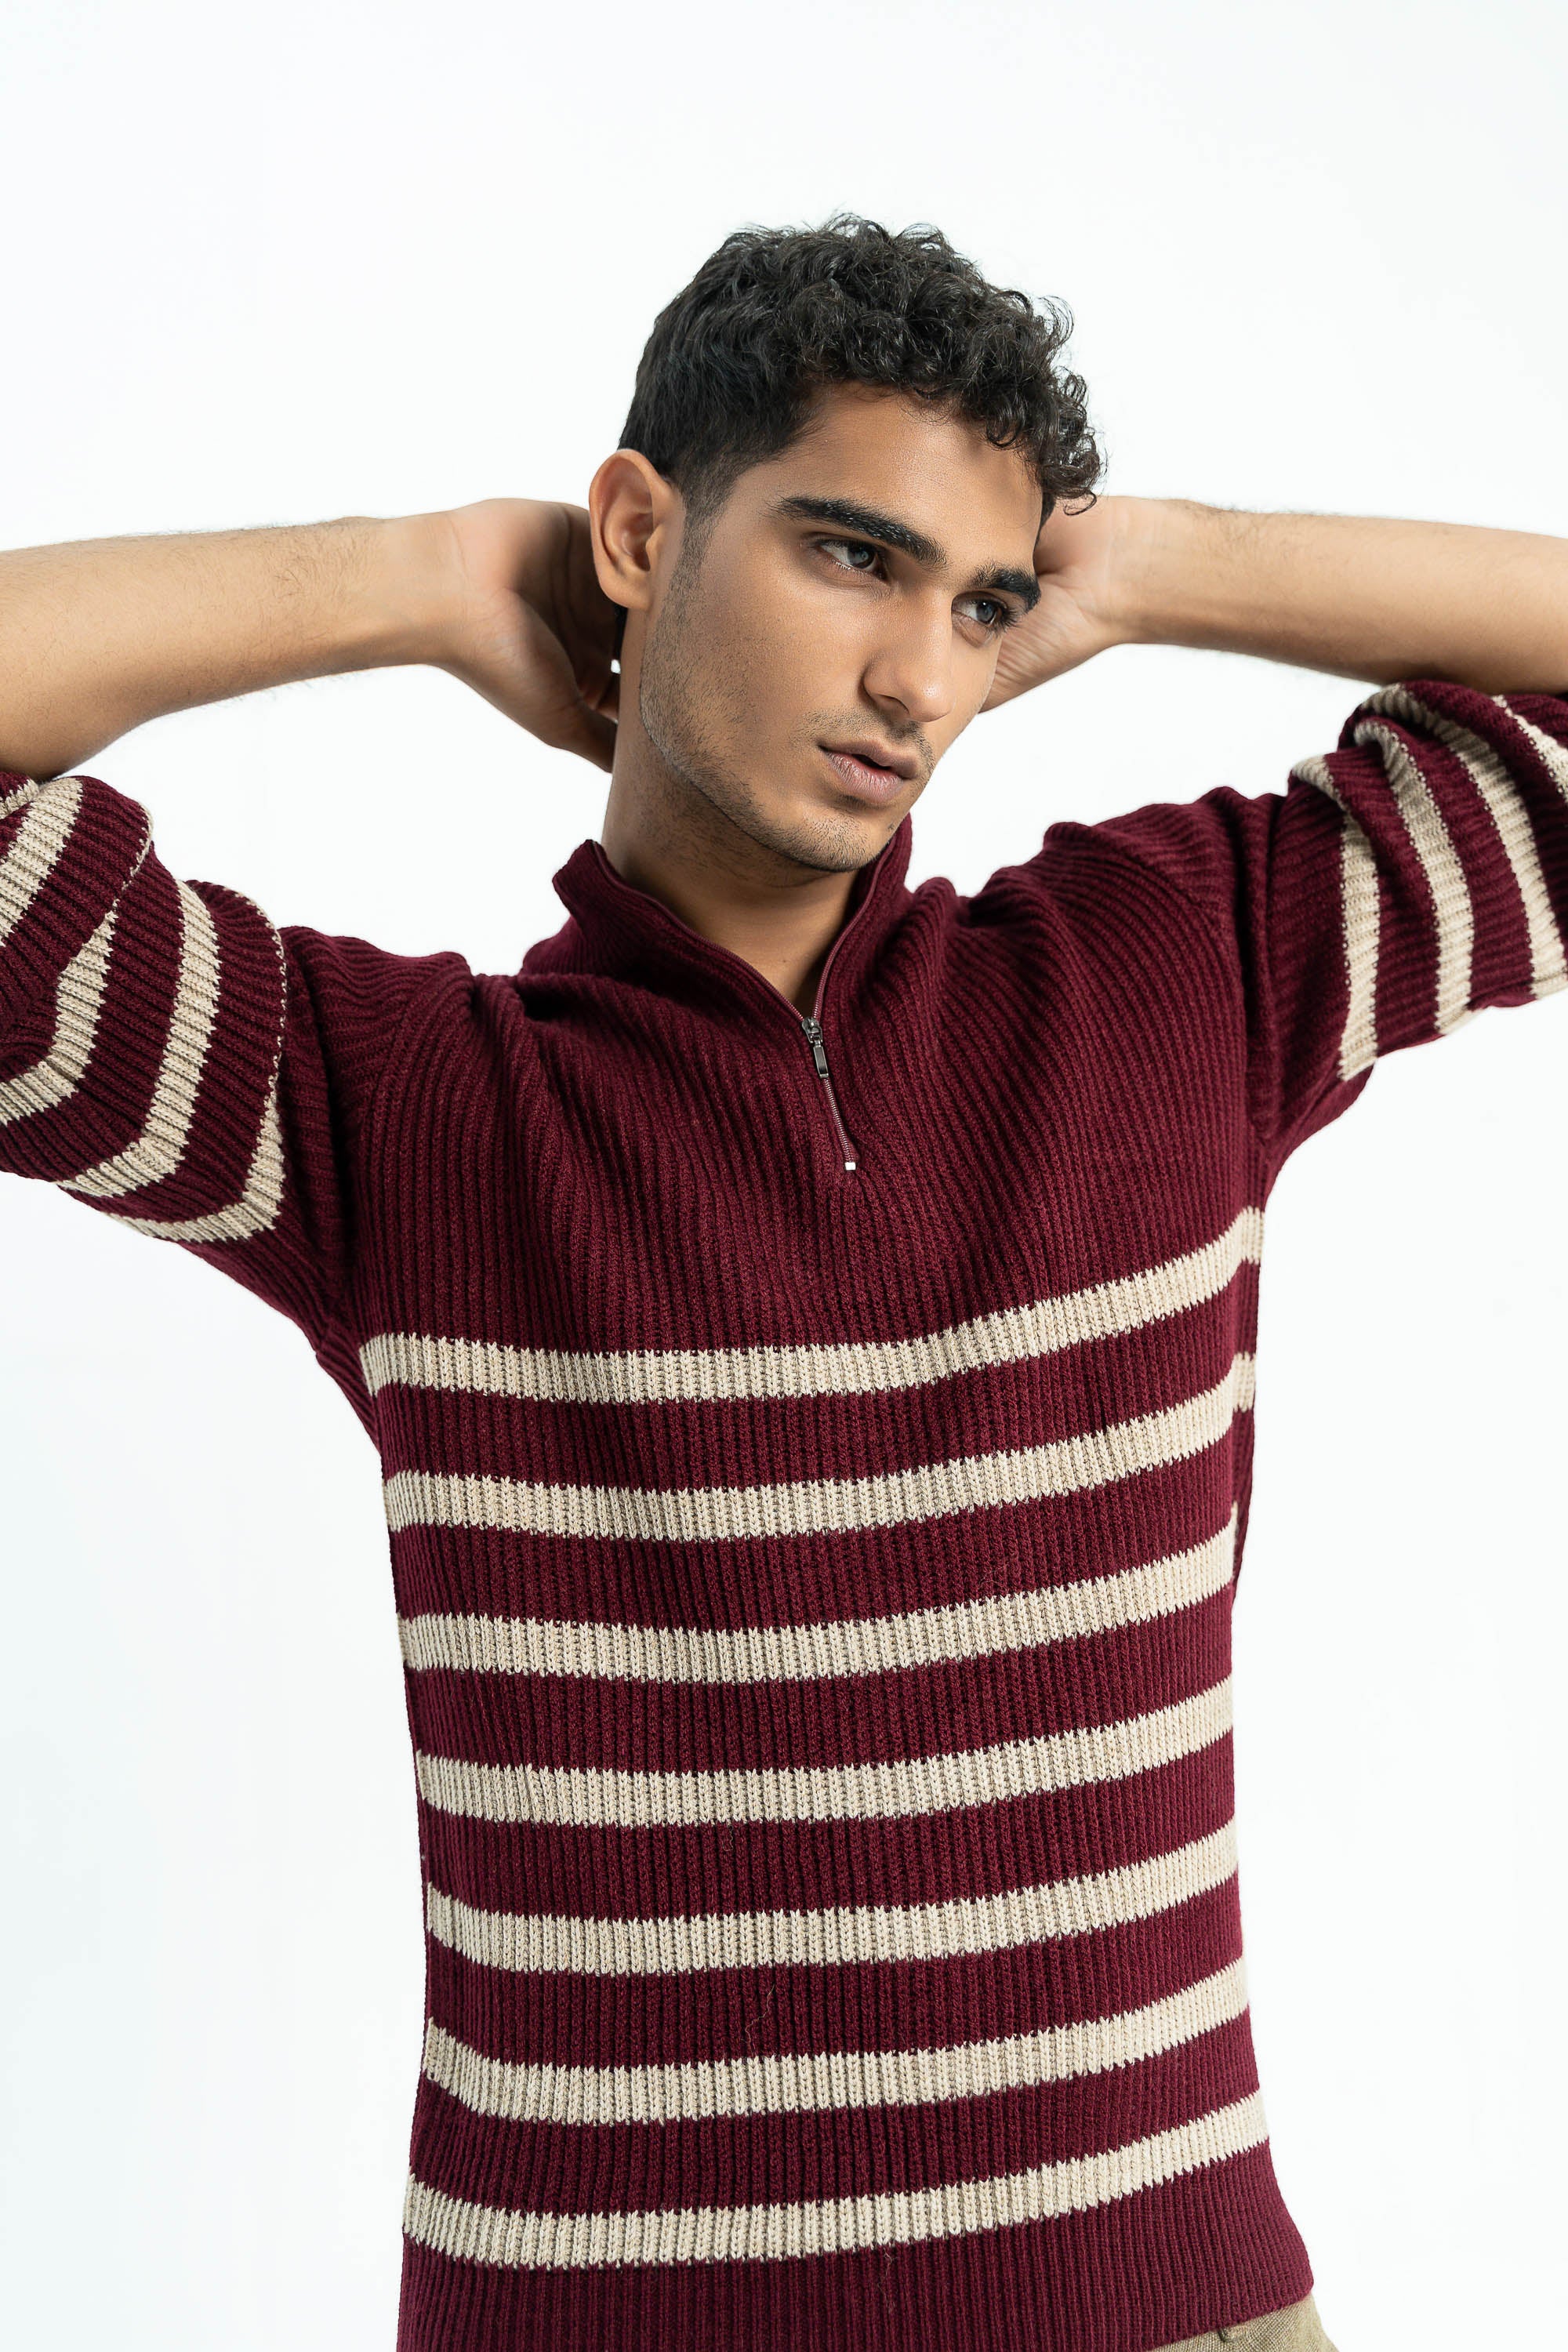 Maroon sweater